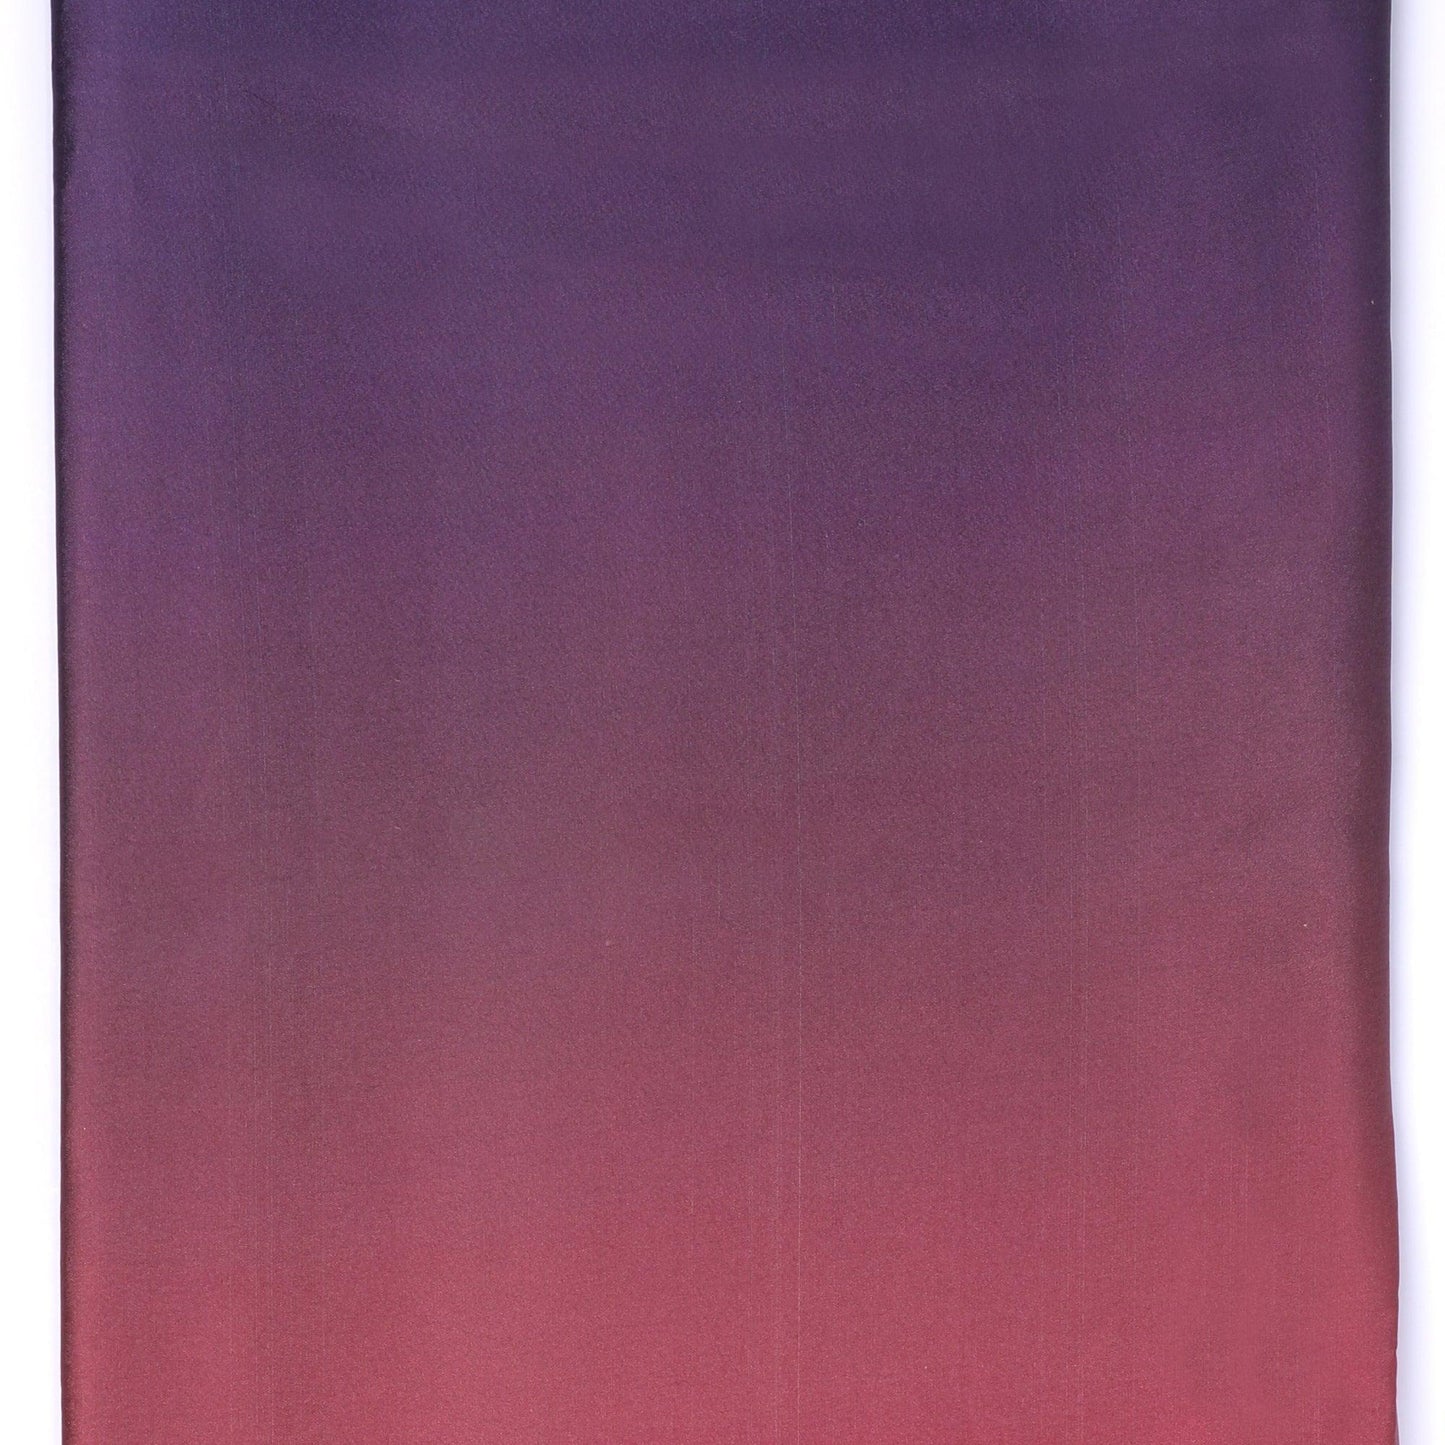 Morden Lifestyle Gradients Digital Printed Fabric - Japan Satin - FAB VOGUE Studio®